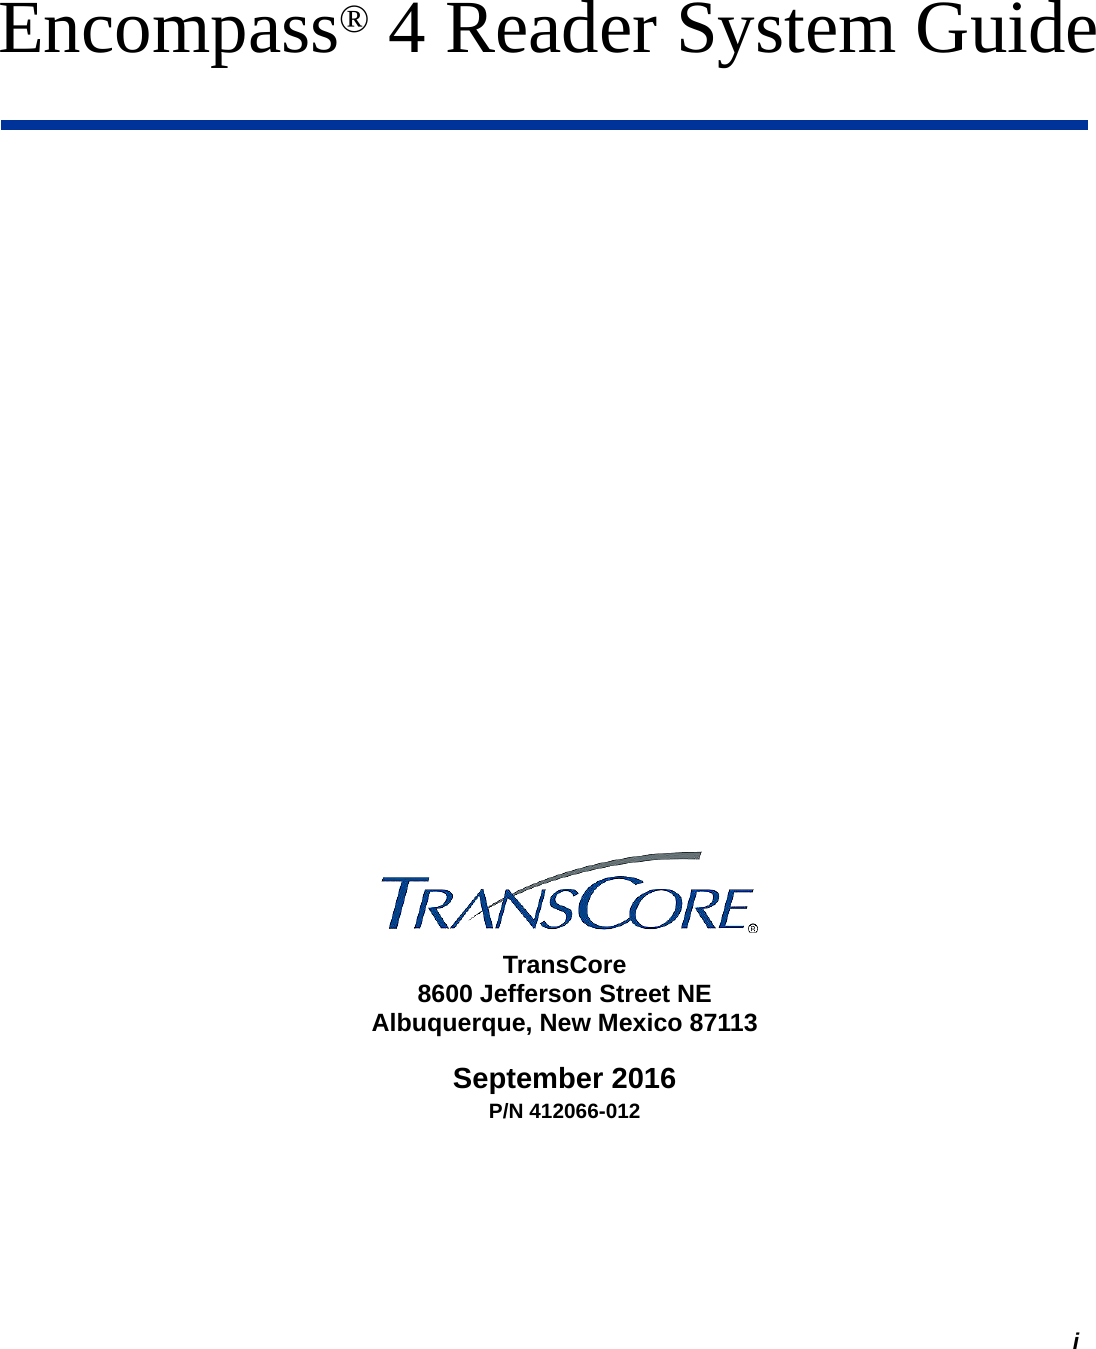 iTransCore8600 Jefferson Street NEAlbuquerque, New Mexico 87113September 2016P/N 412066-012Encompass® 4 Reader System Guide 